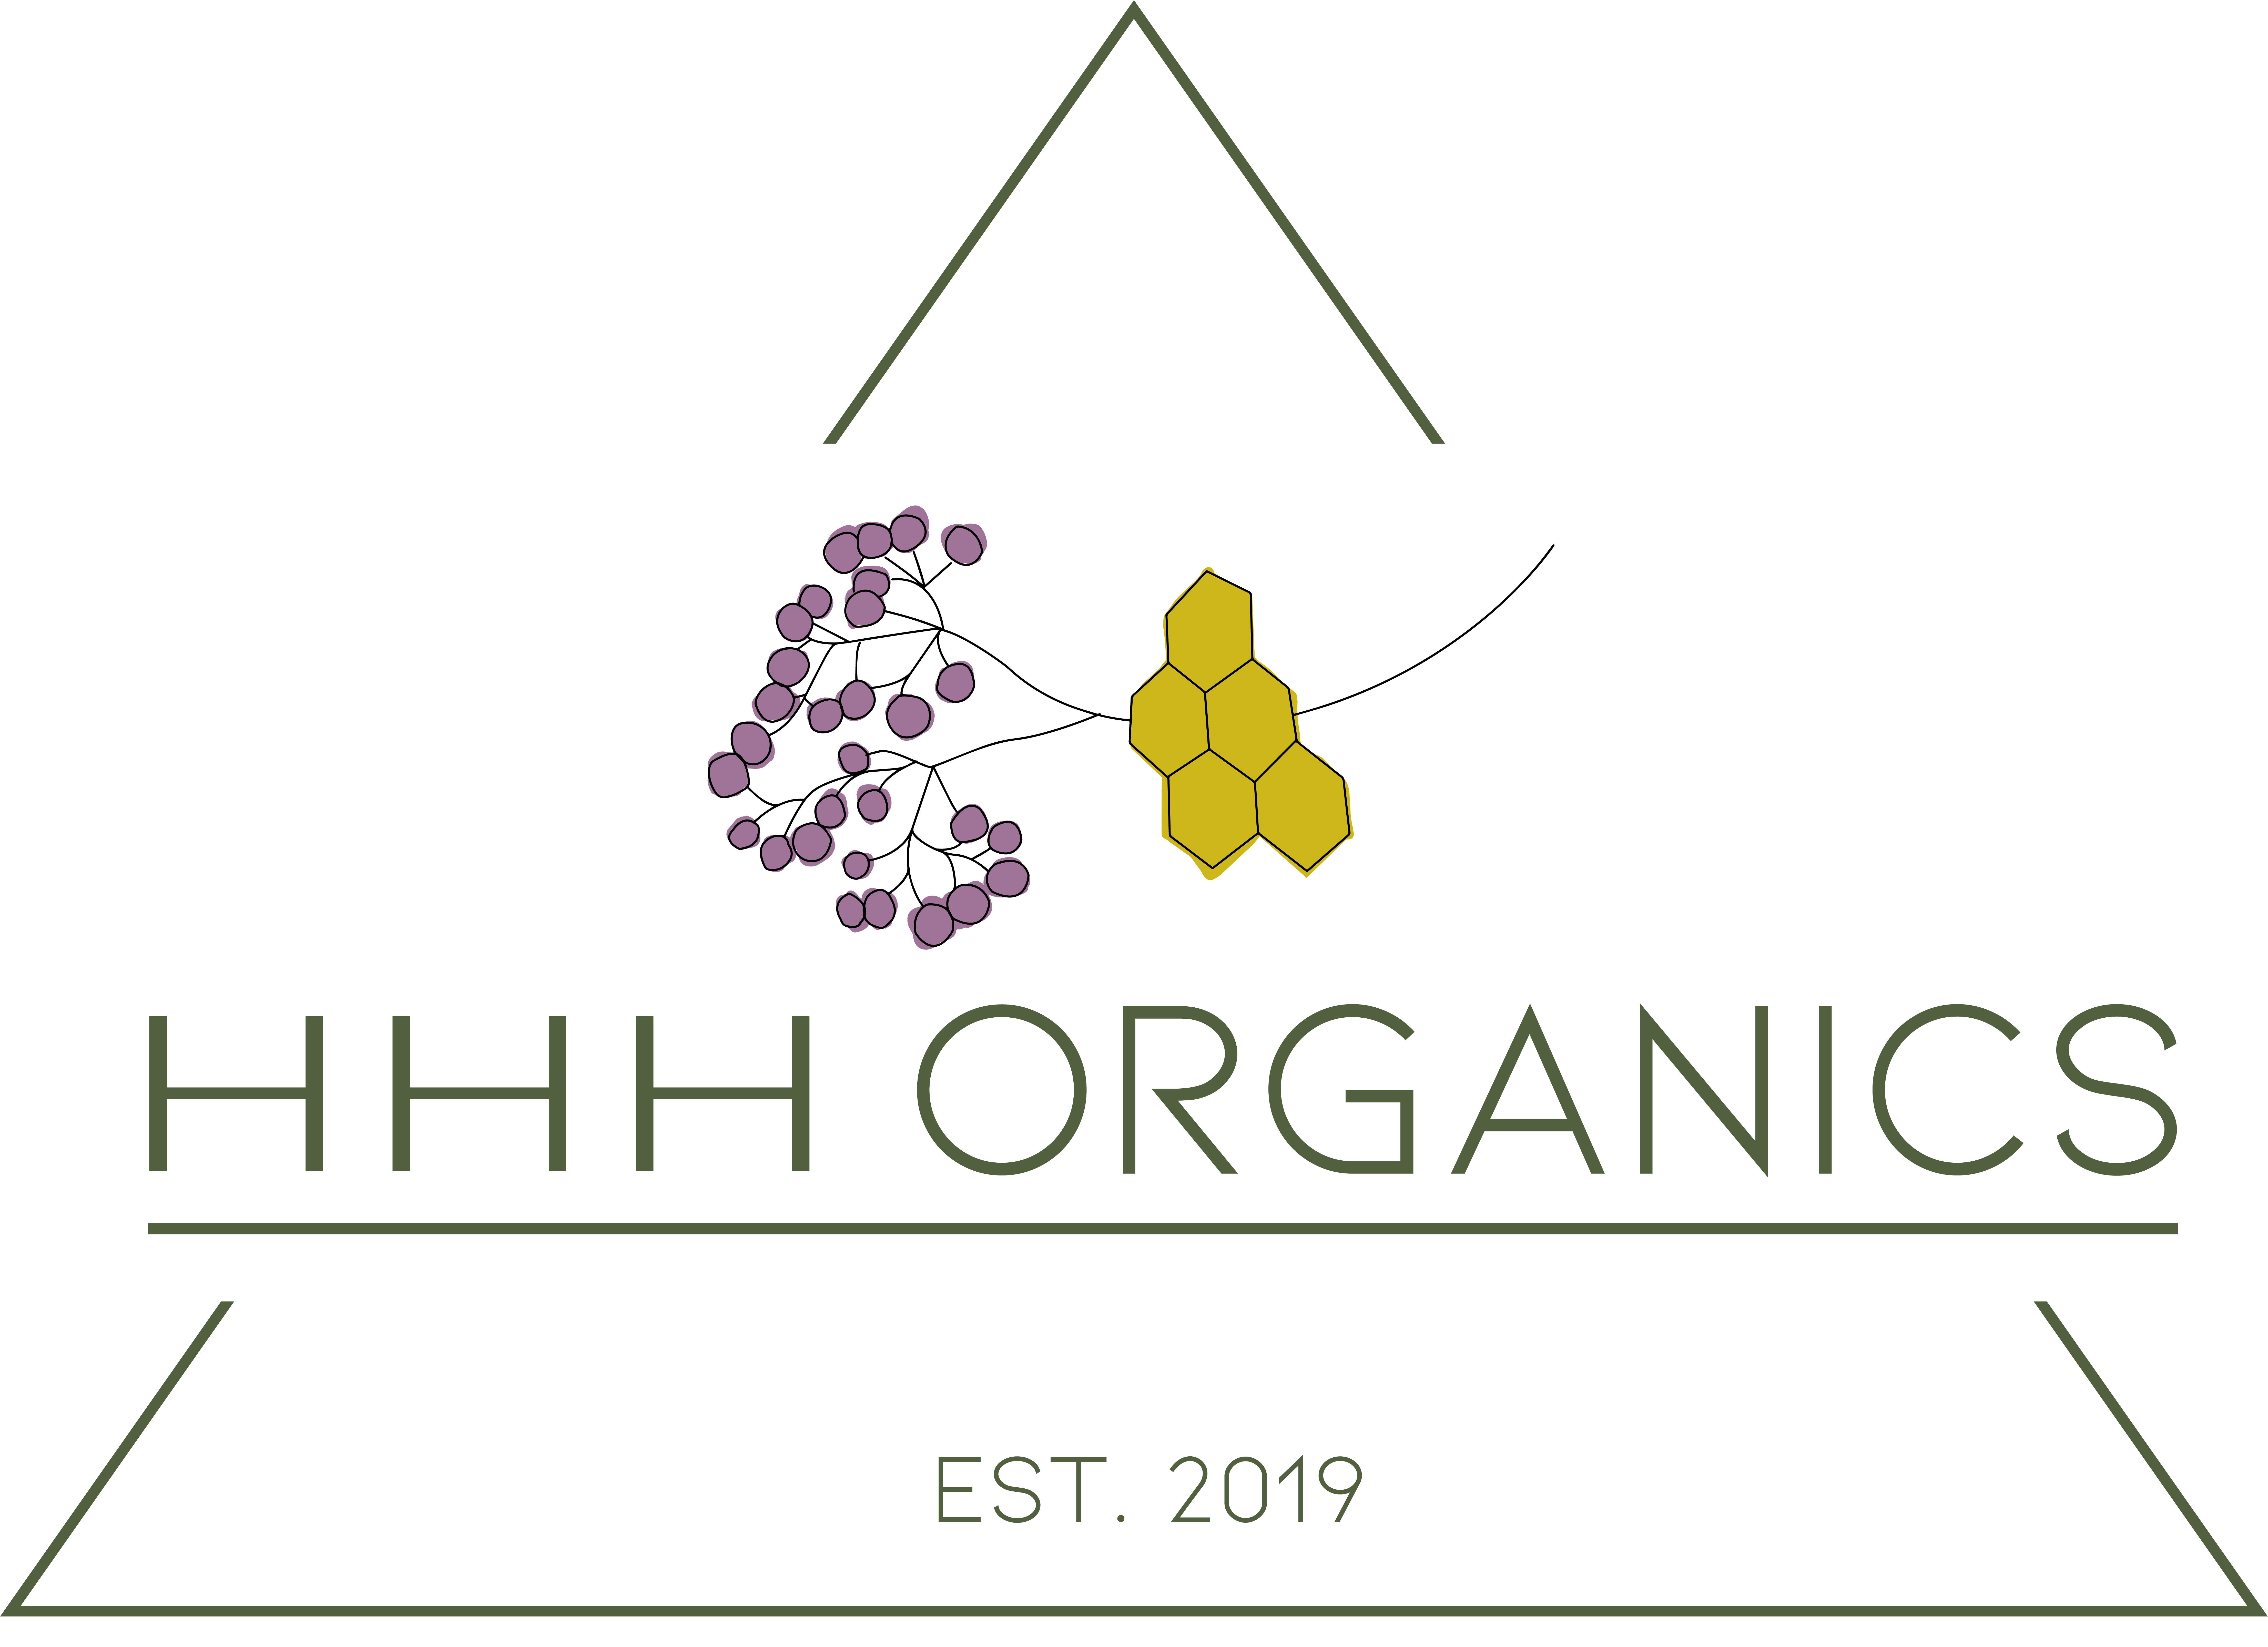 Small Batch Organic Elderberry Goods Hhh Organics